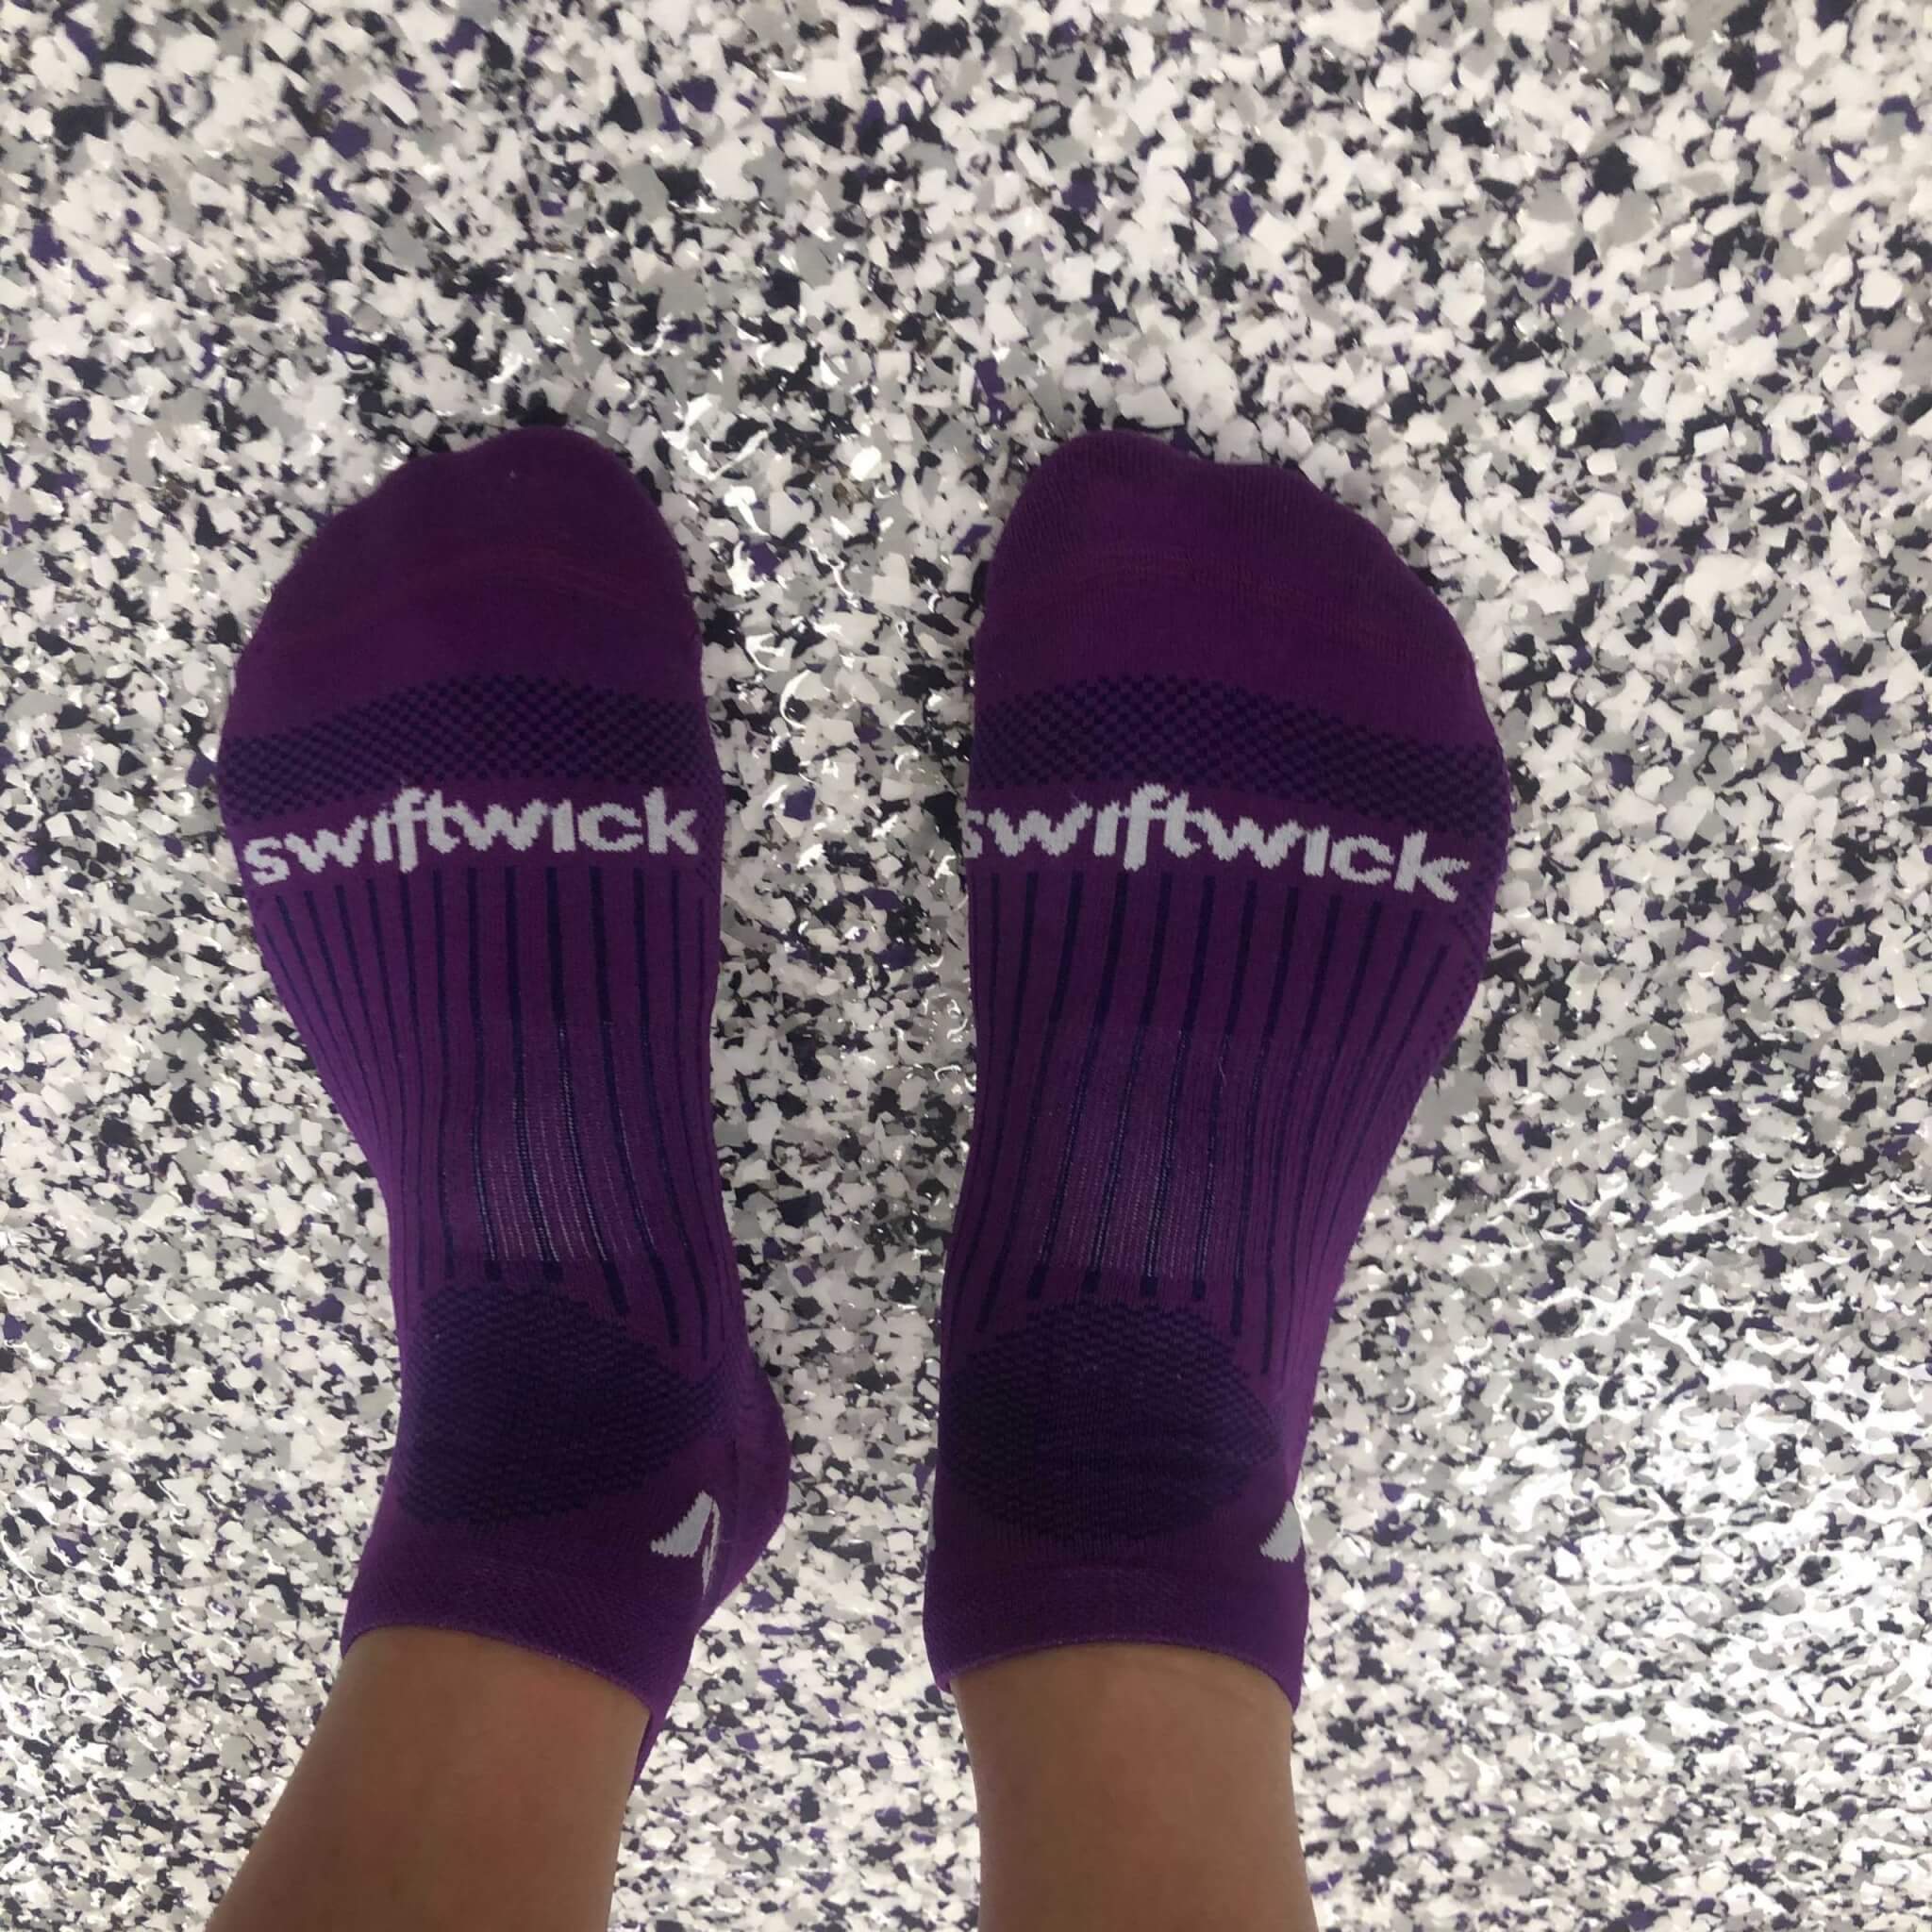 Swiftwick socks